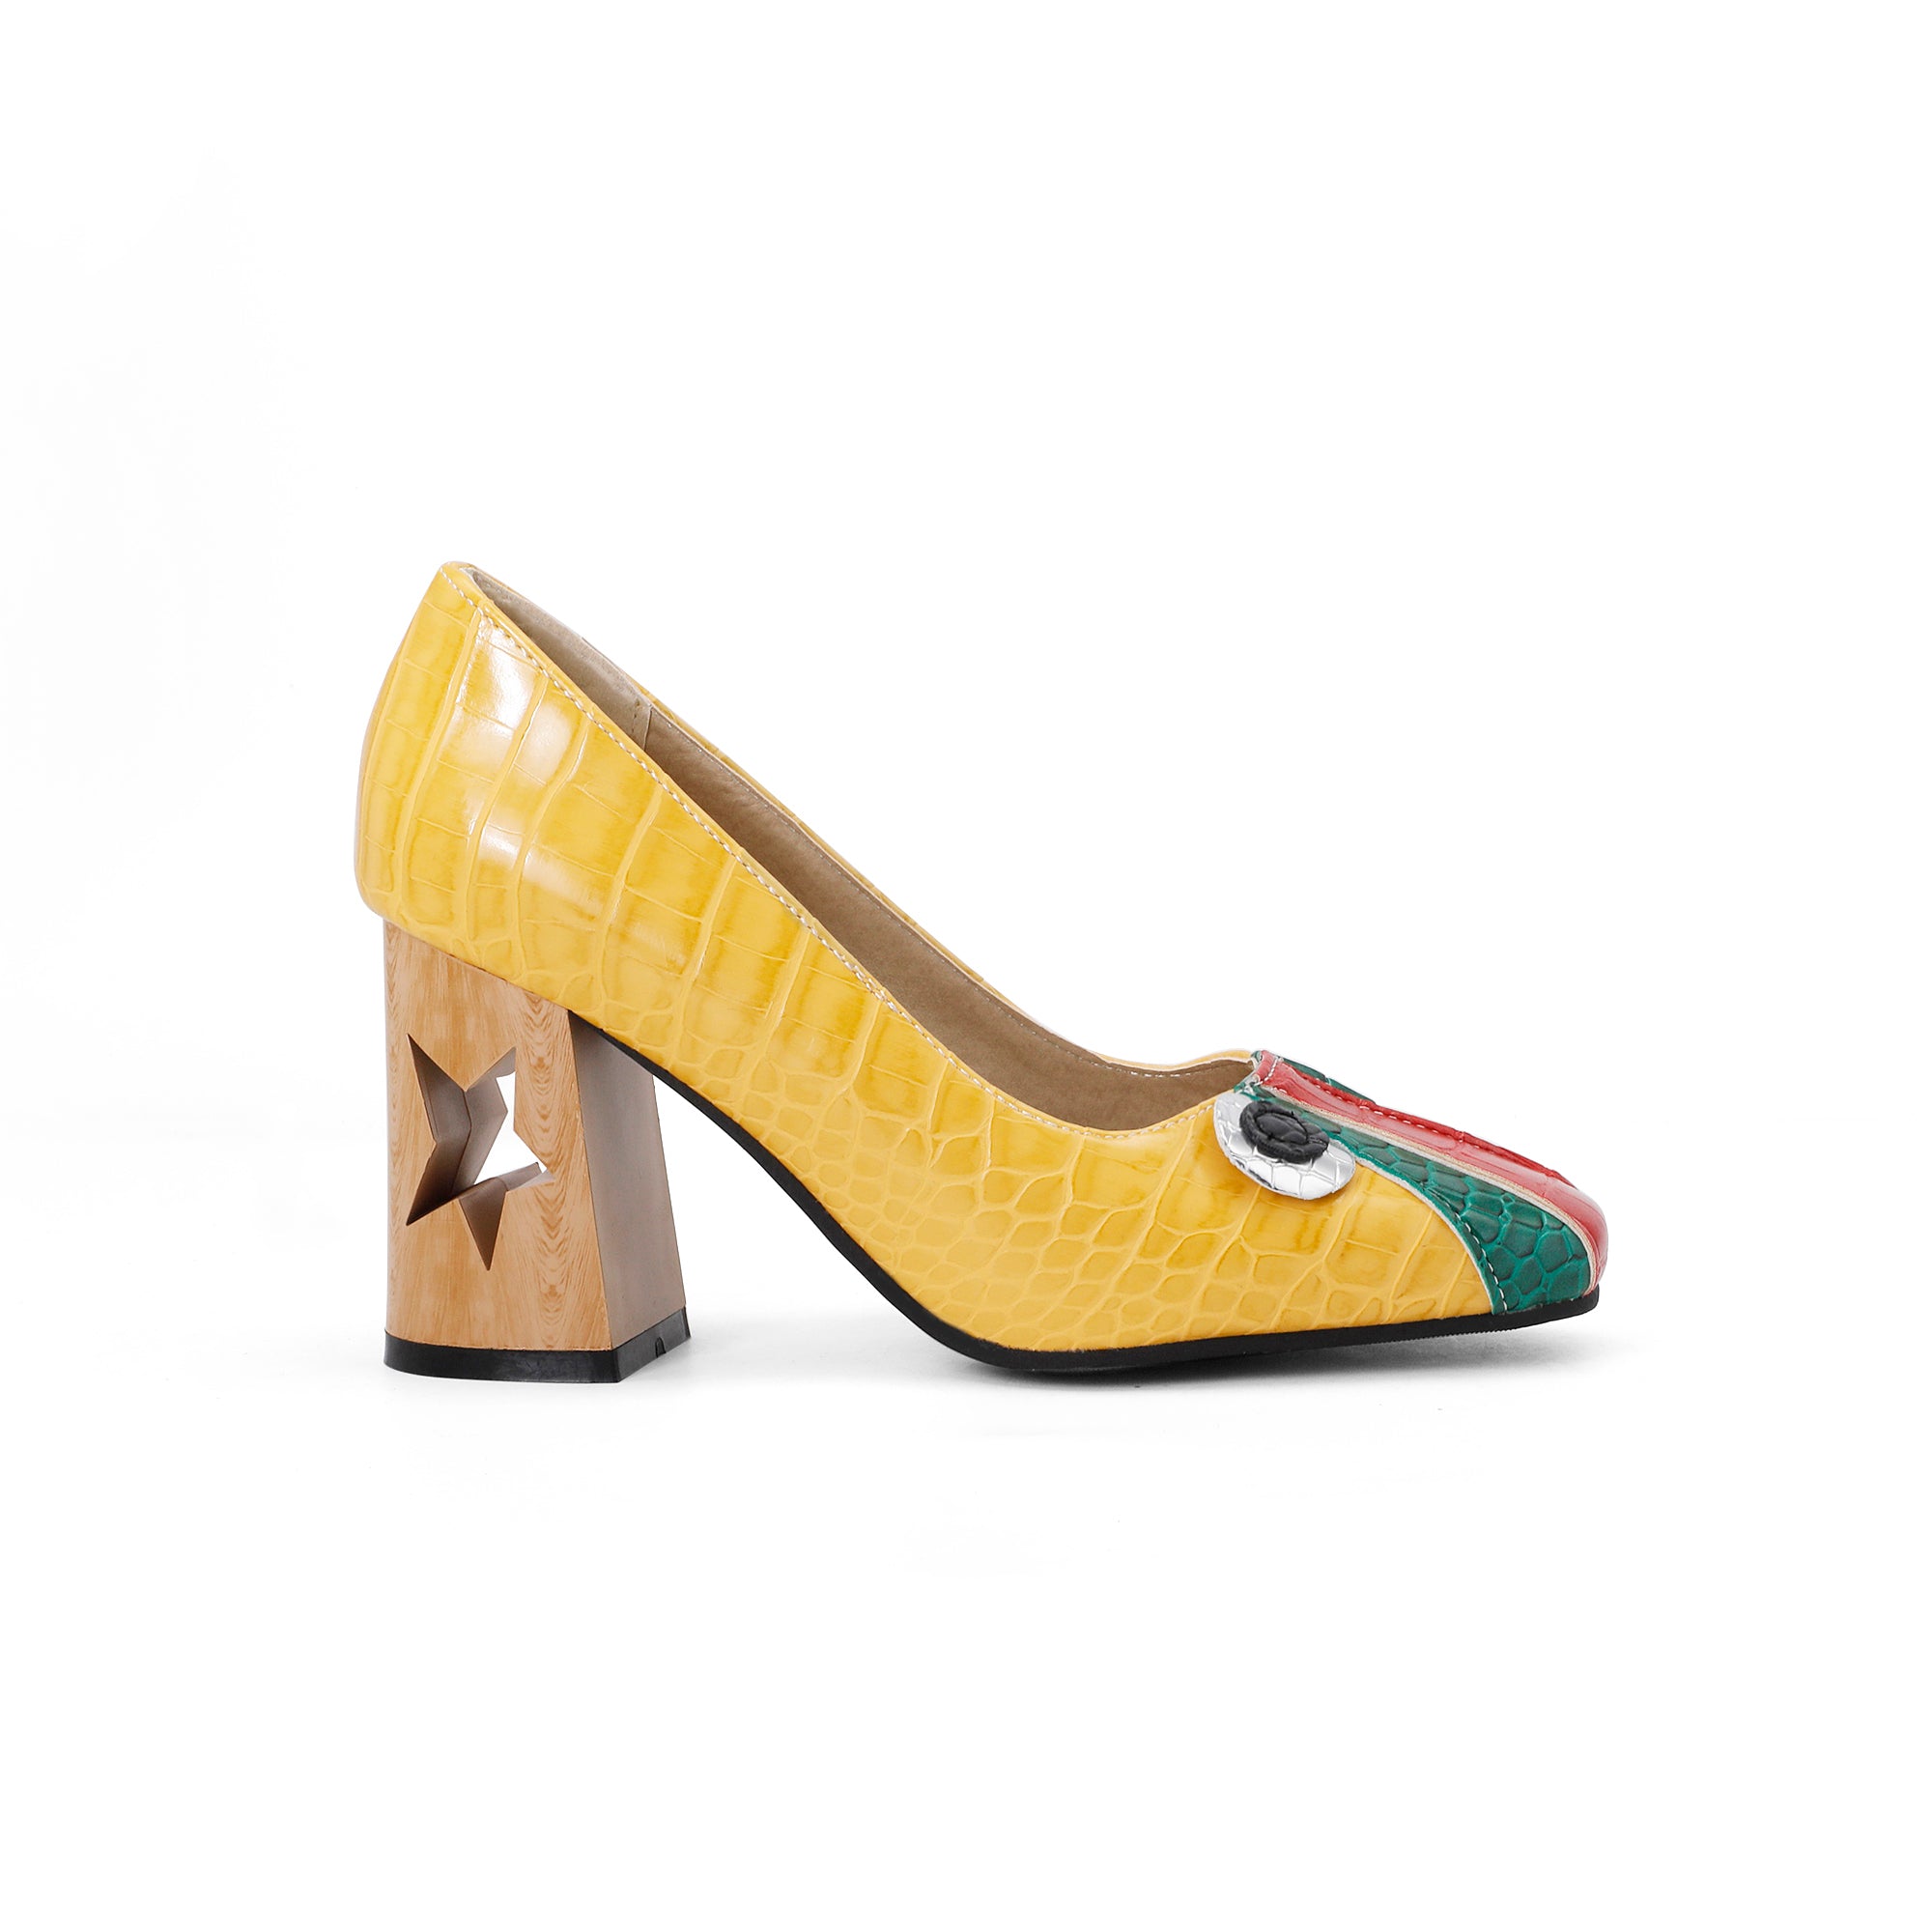 Bigsizeheels Cute cartoon thick heel women's casual shoes - yellow freeshipping - bigsizeheel®-size5-size15 -All Plus Sizes Available!